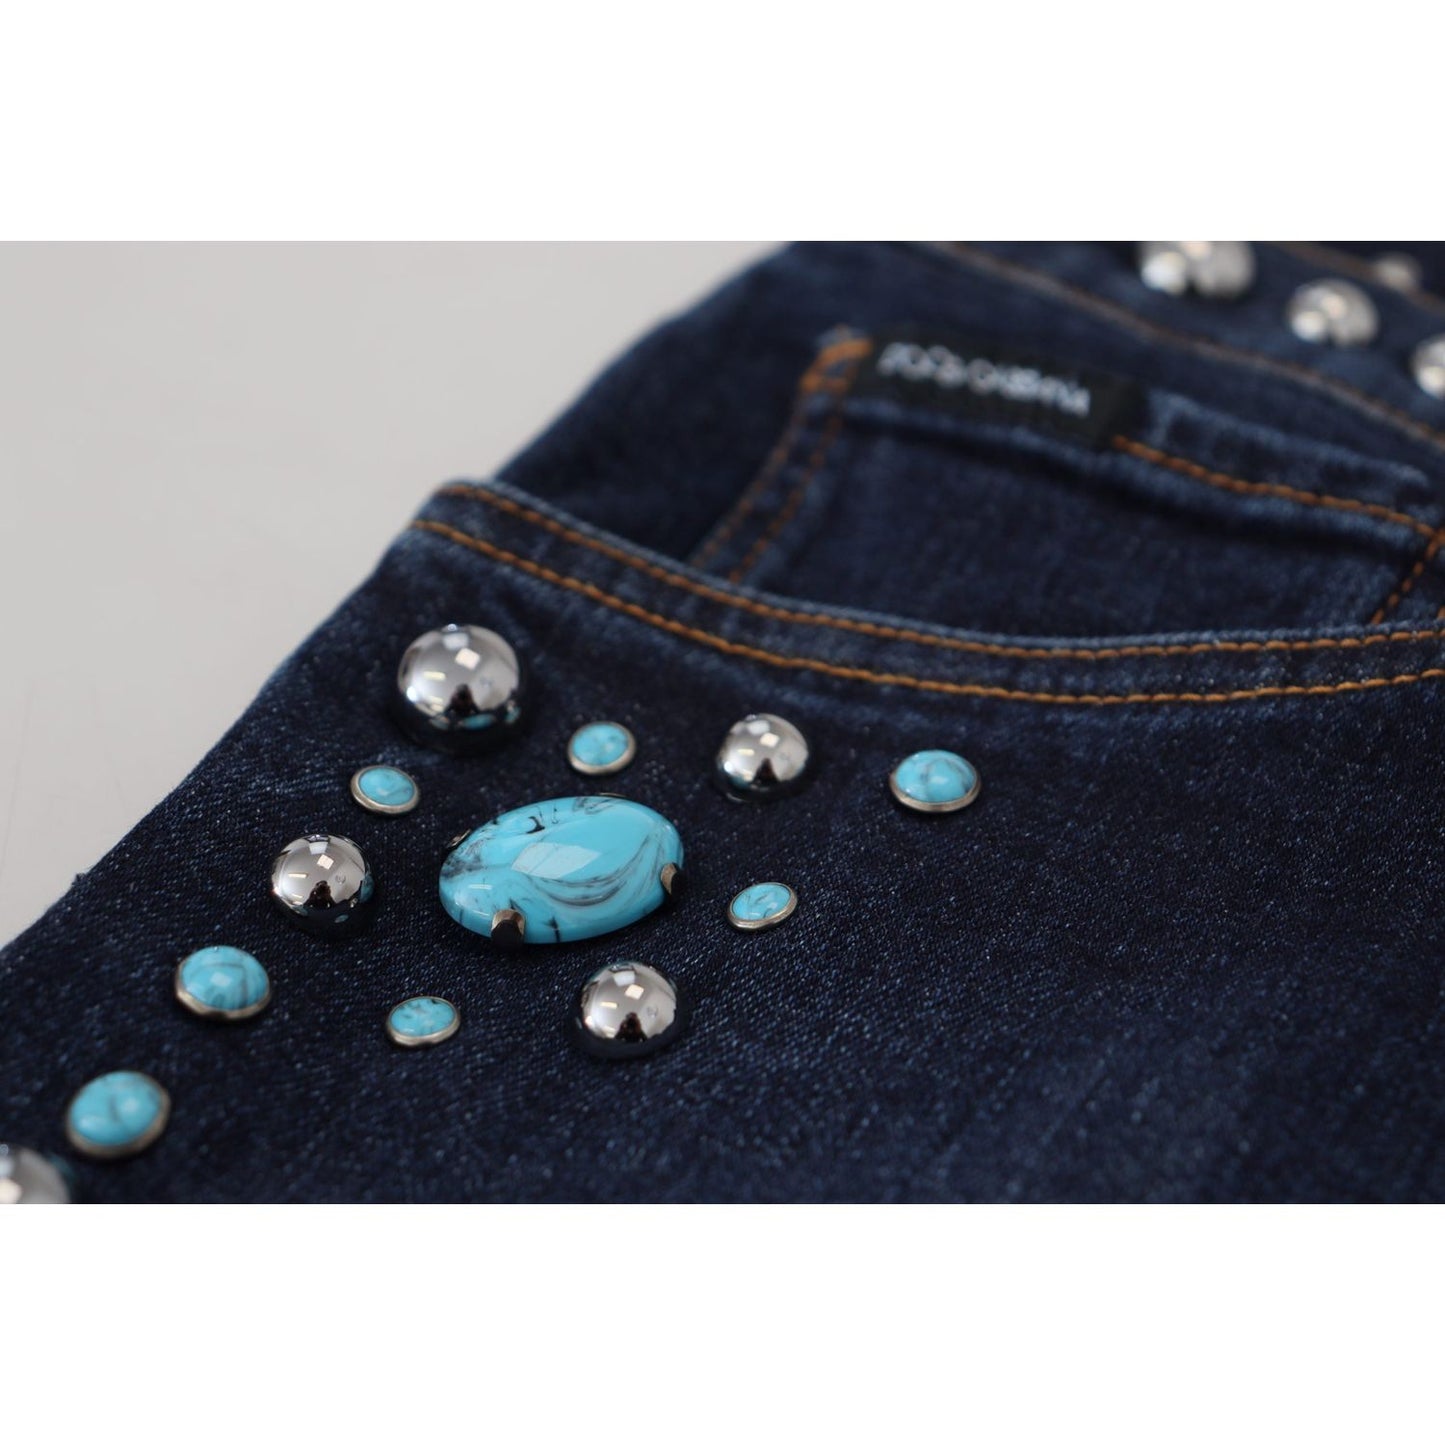 Dolce & Gabbana Studded Opulence Denim Jeans blue-cotton-studded-low-waist-denim-jeans